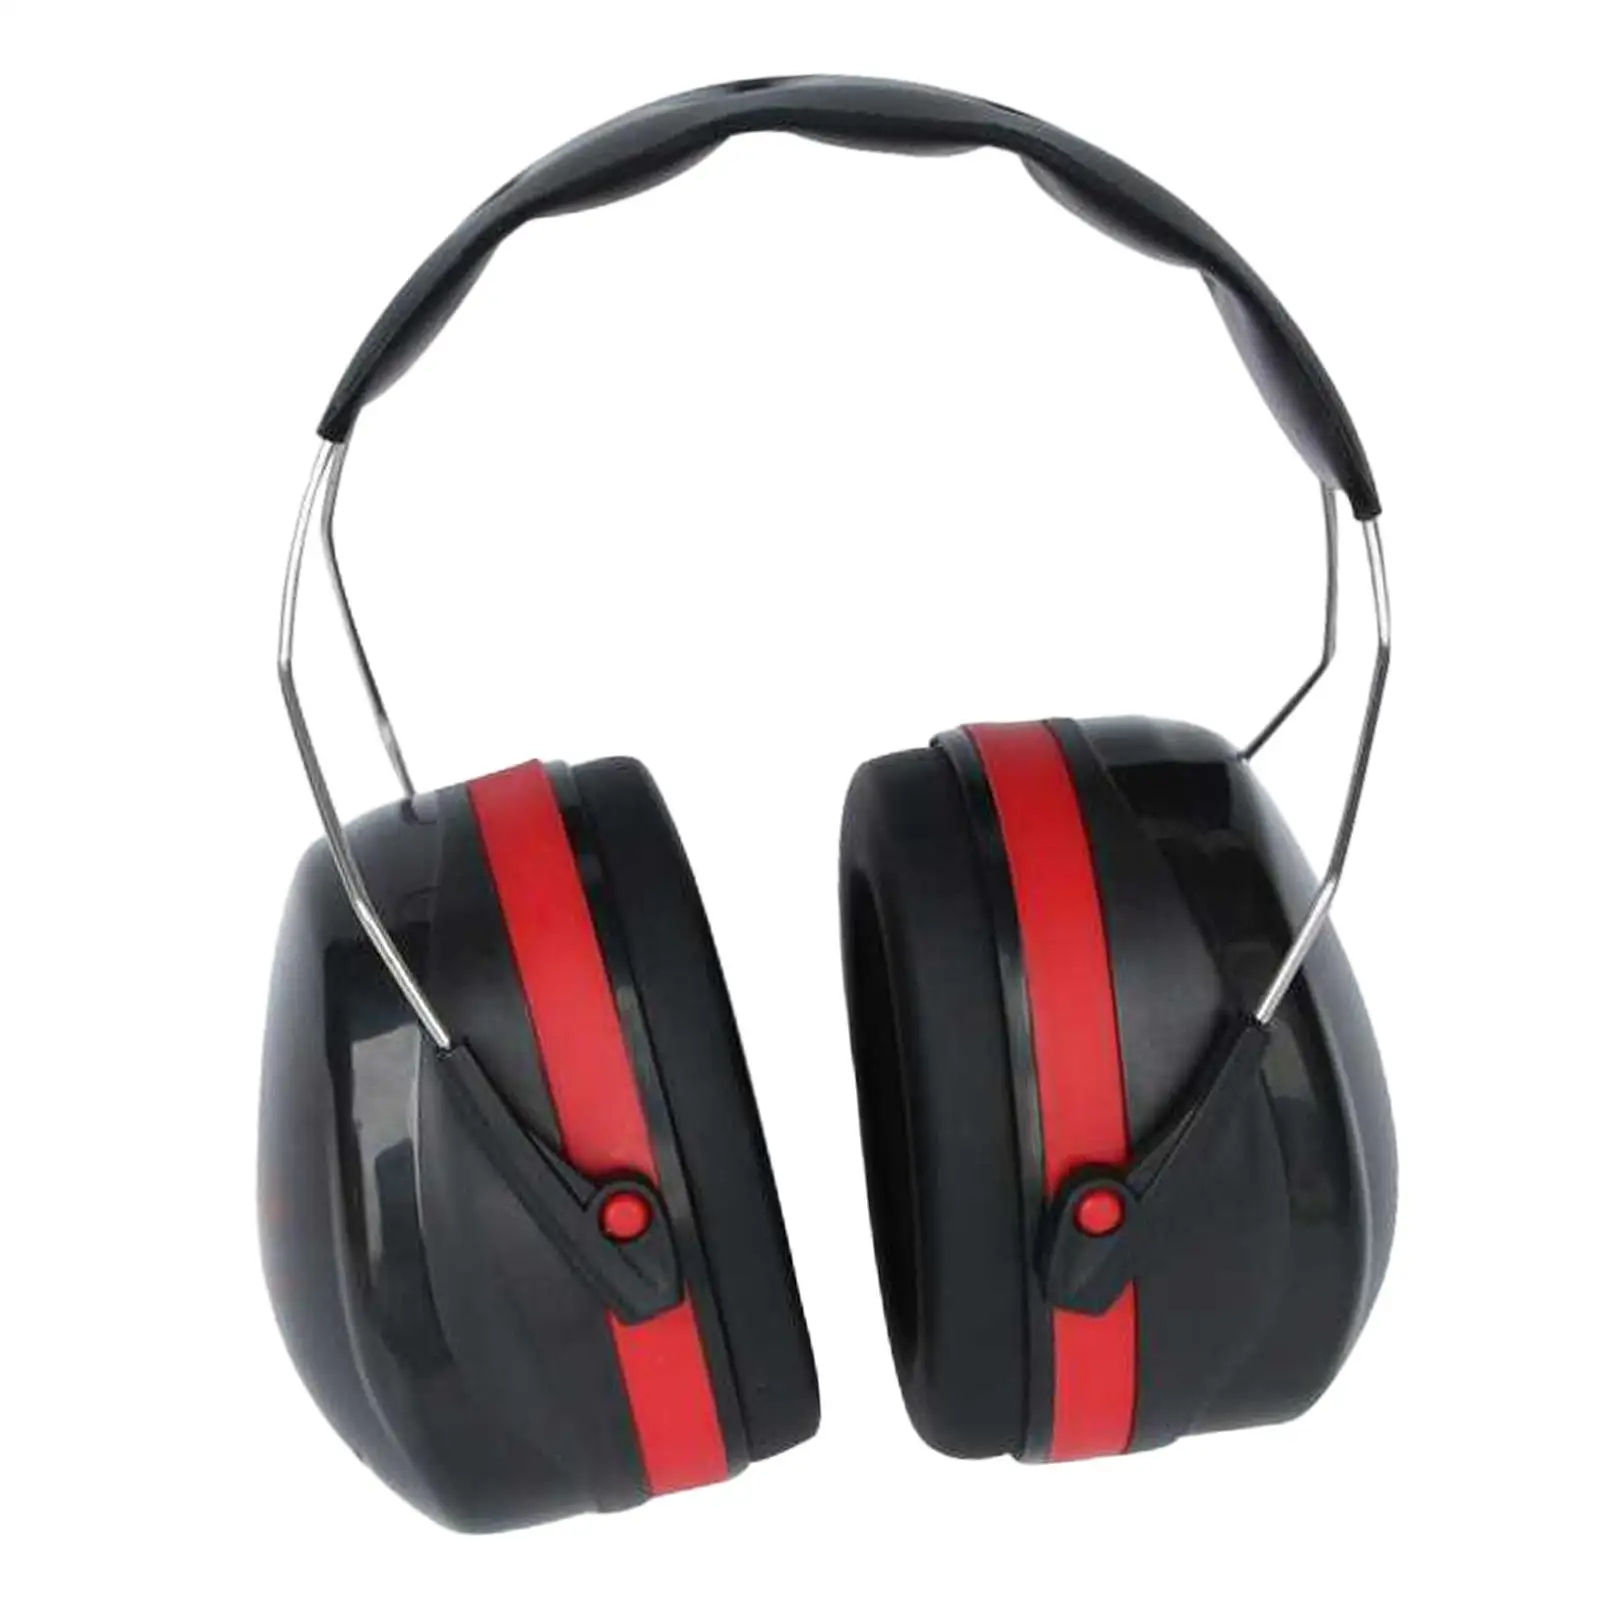 Noise Reduction Headphones Foldable Sponge Ear Pad Soundproof Comfortable for House Decorating Sleeping Workshop Study Concerts